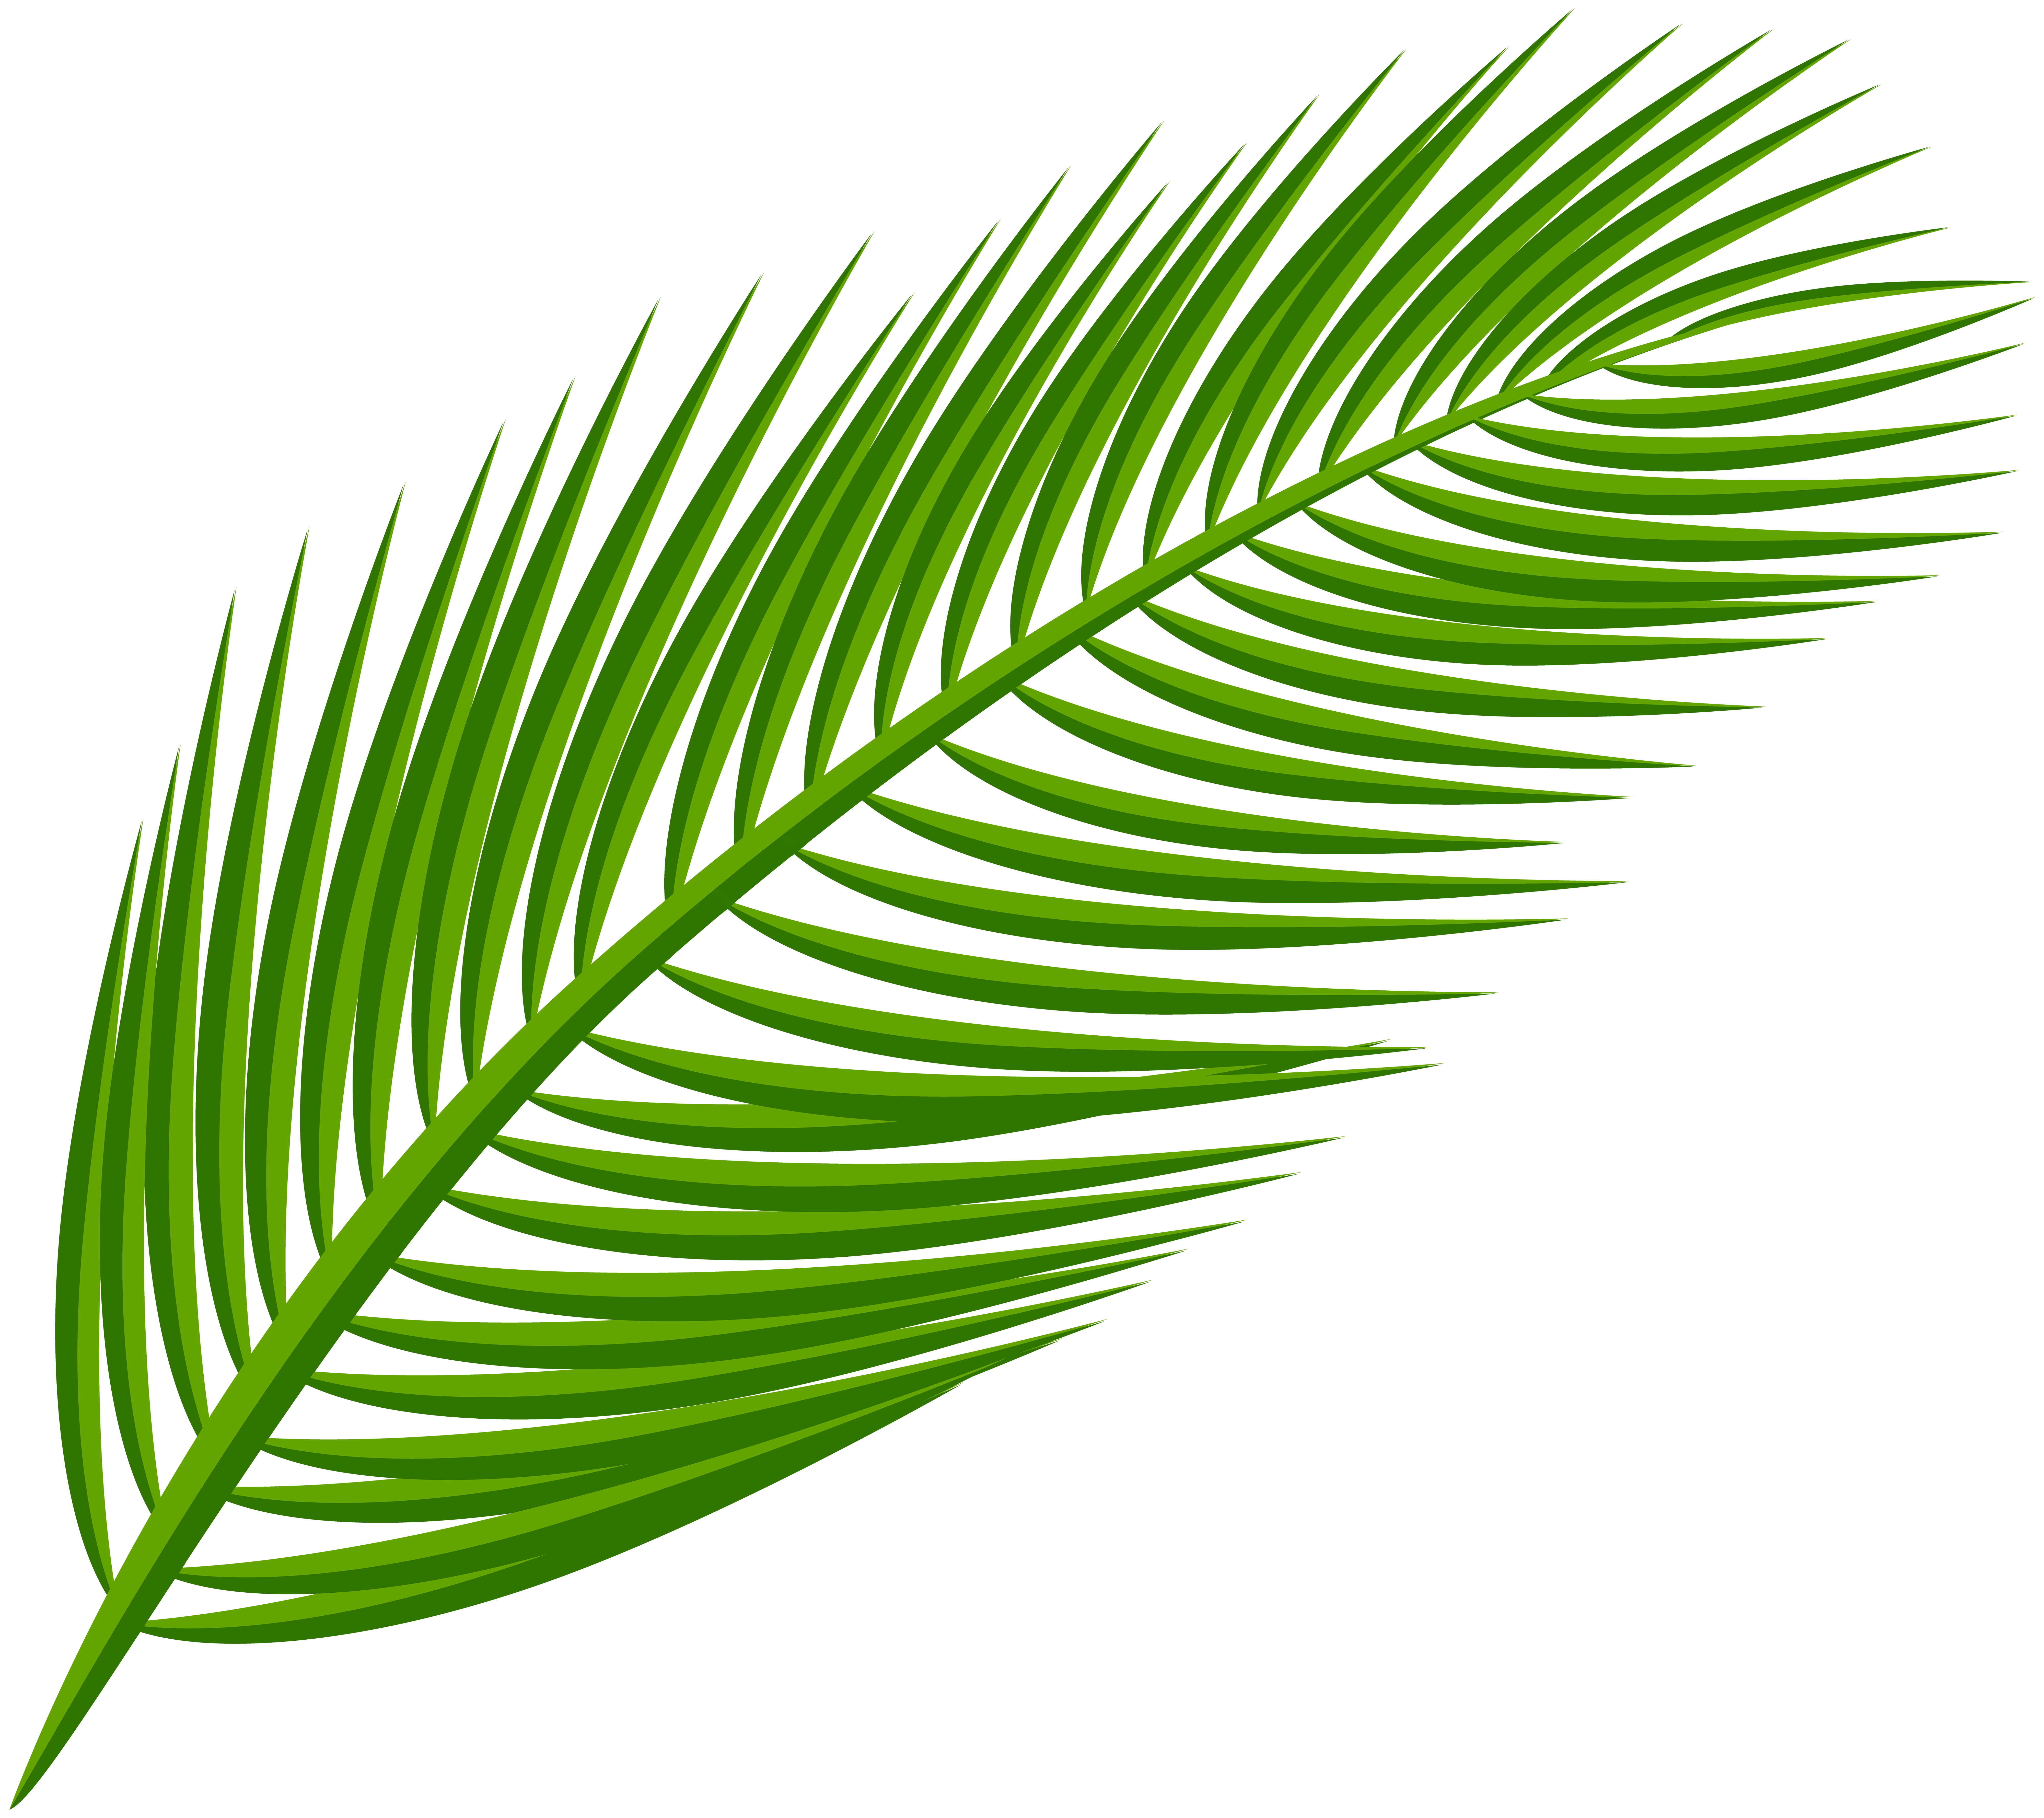 Palm leaf clipart.